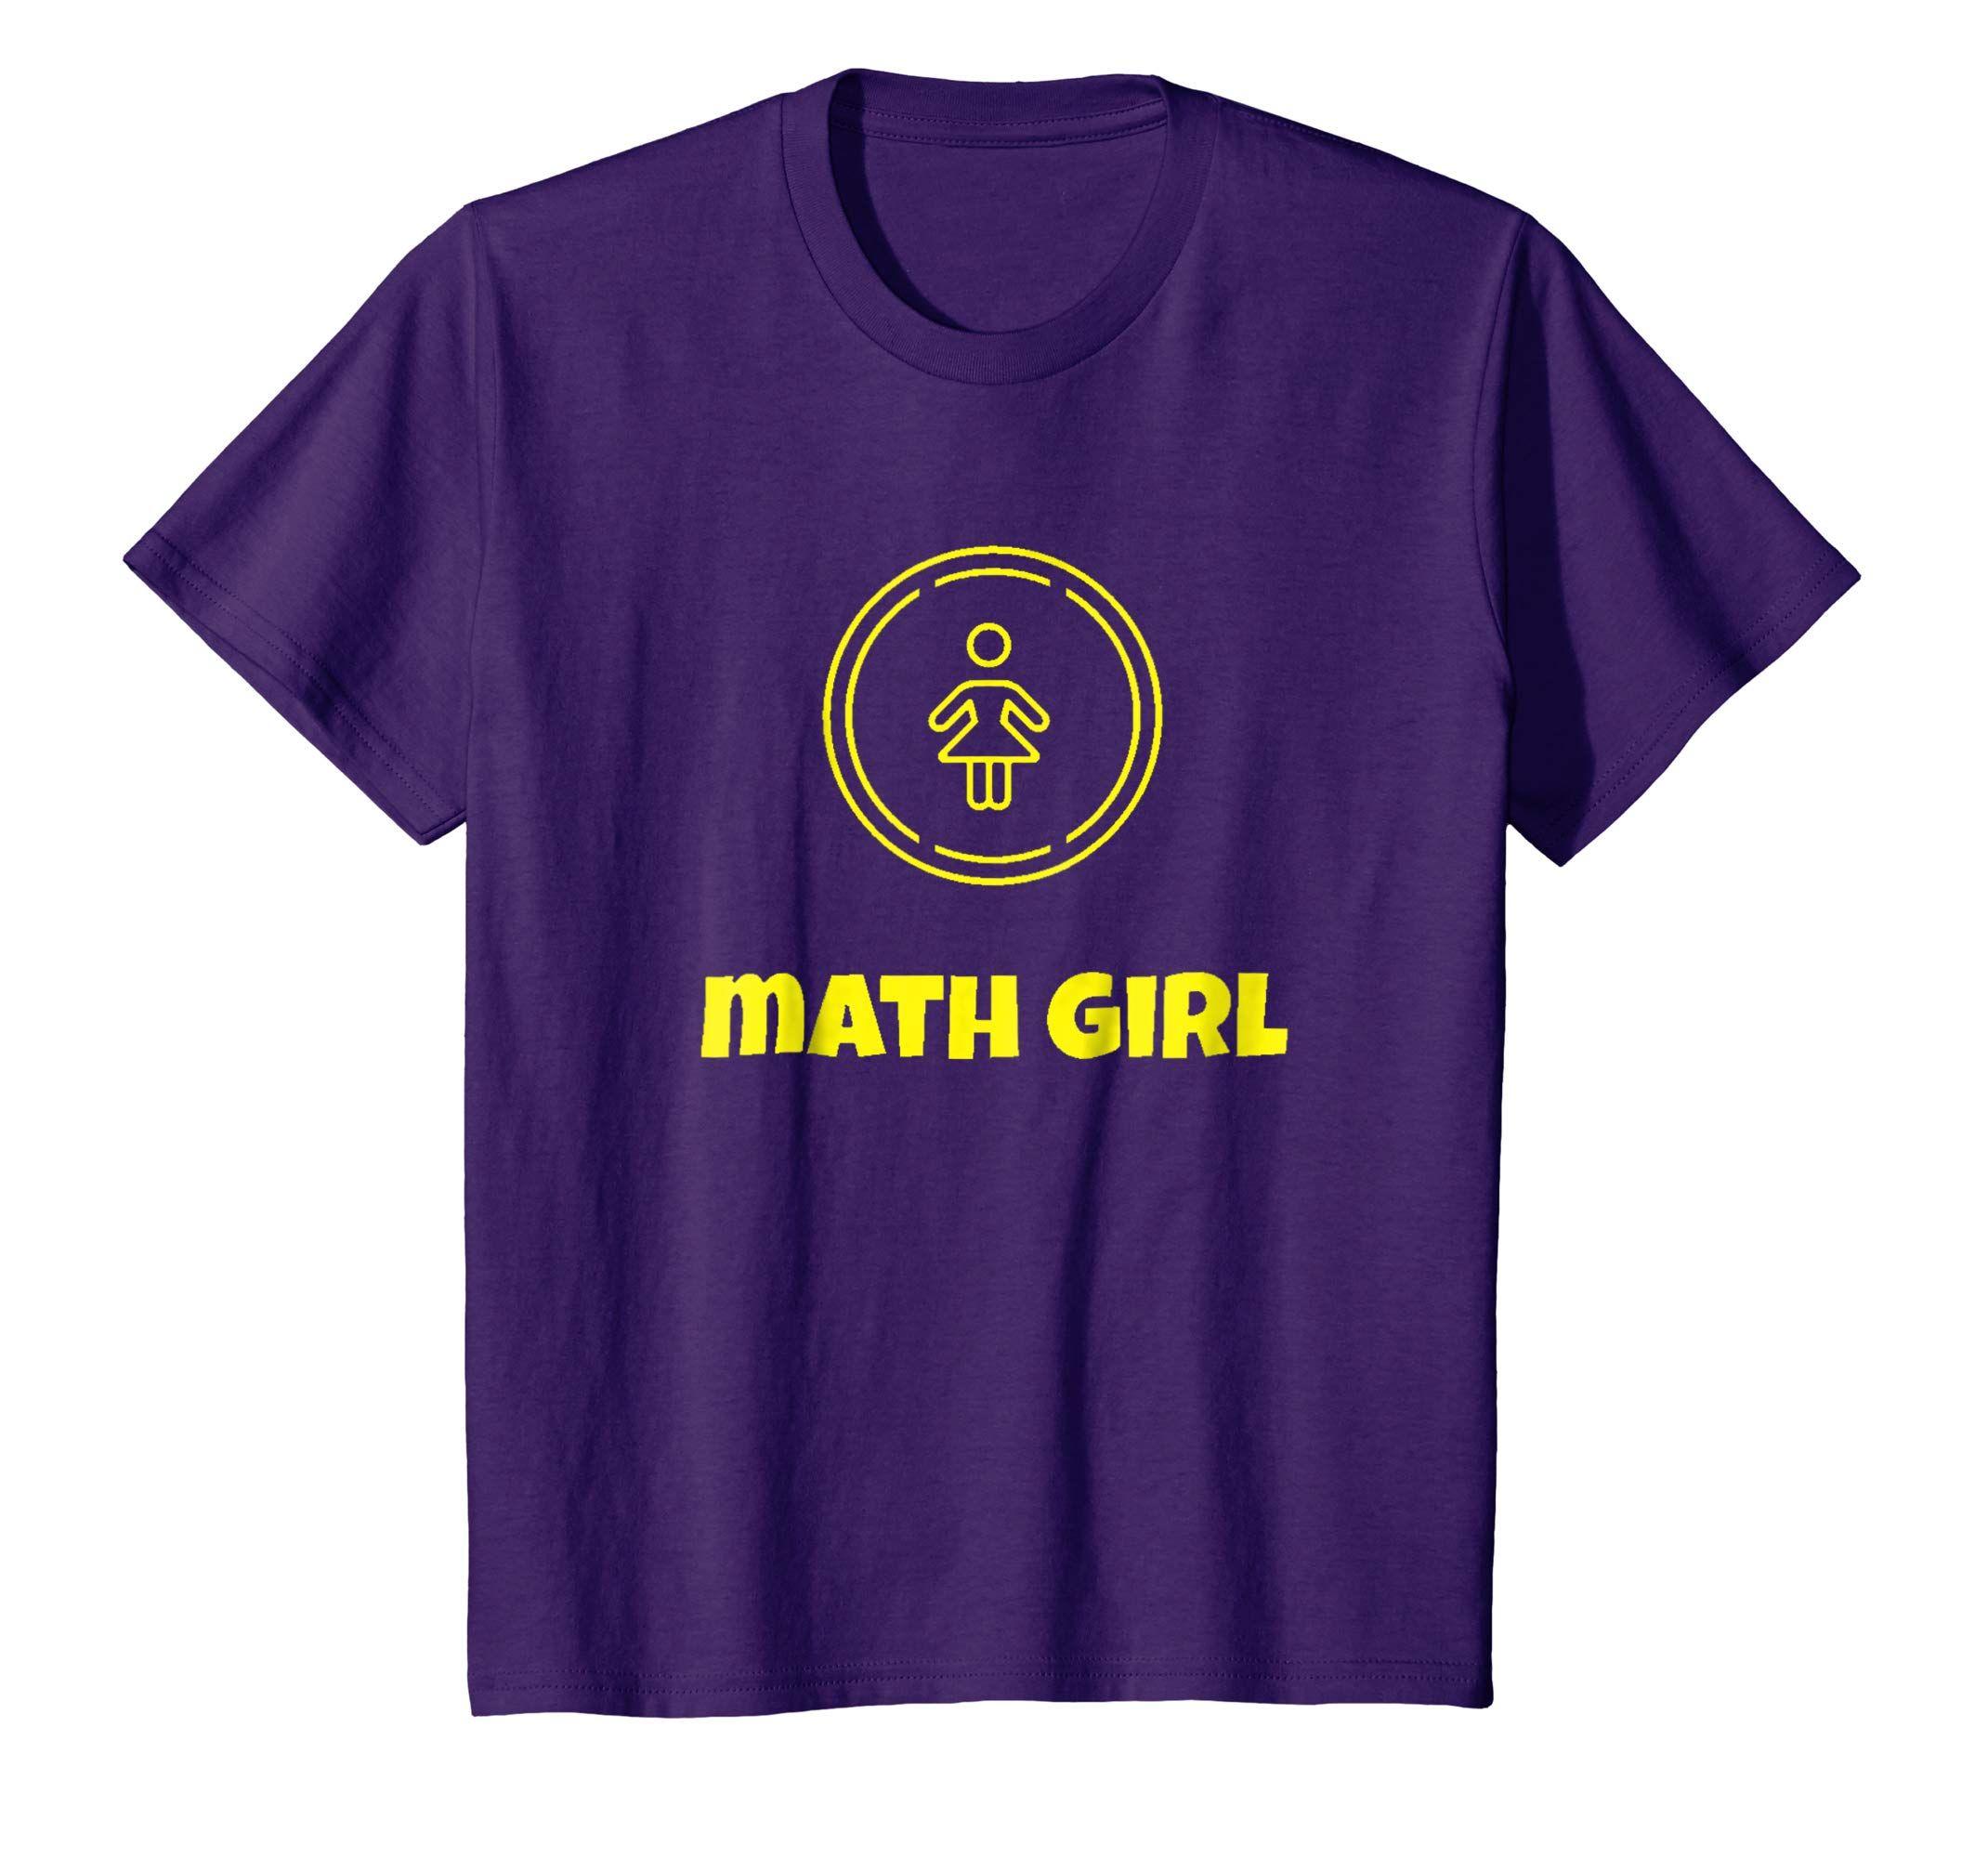 Awesome Math Logo - Amazon.com: Kids FUN Awesome Math Girl t-shirt: Clothing